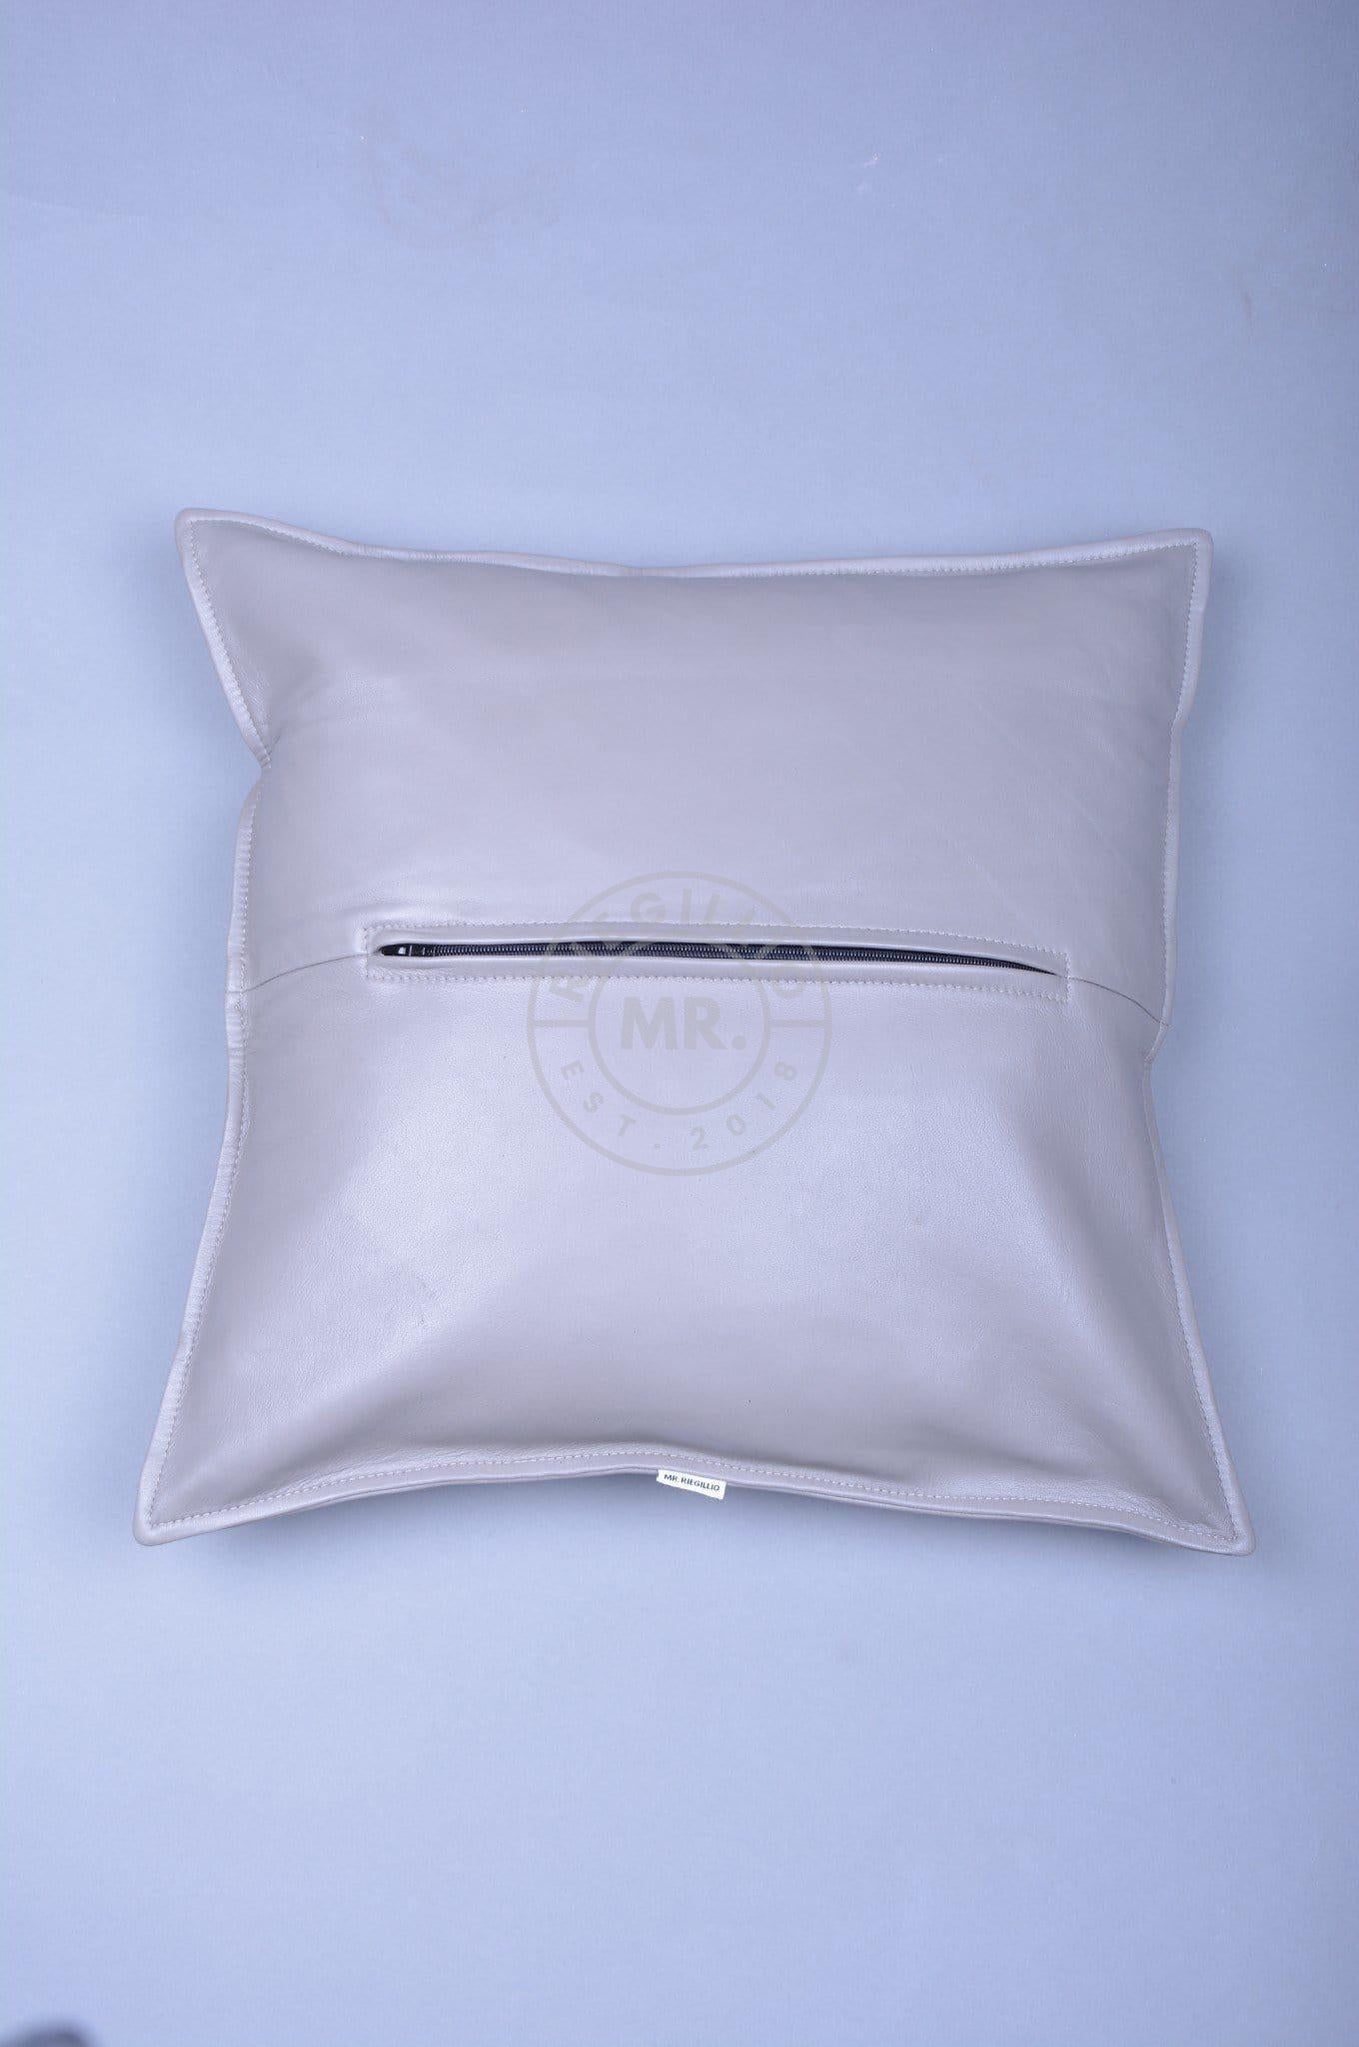 Grey Leather Pillow at MR. Riegillio